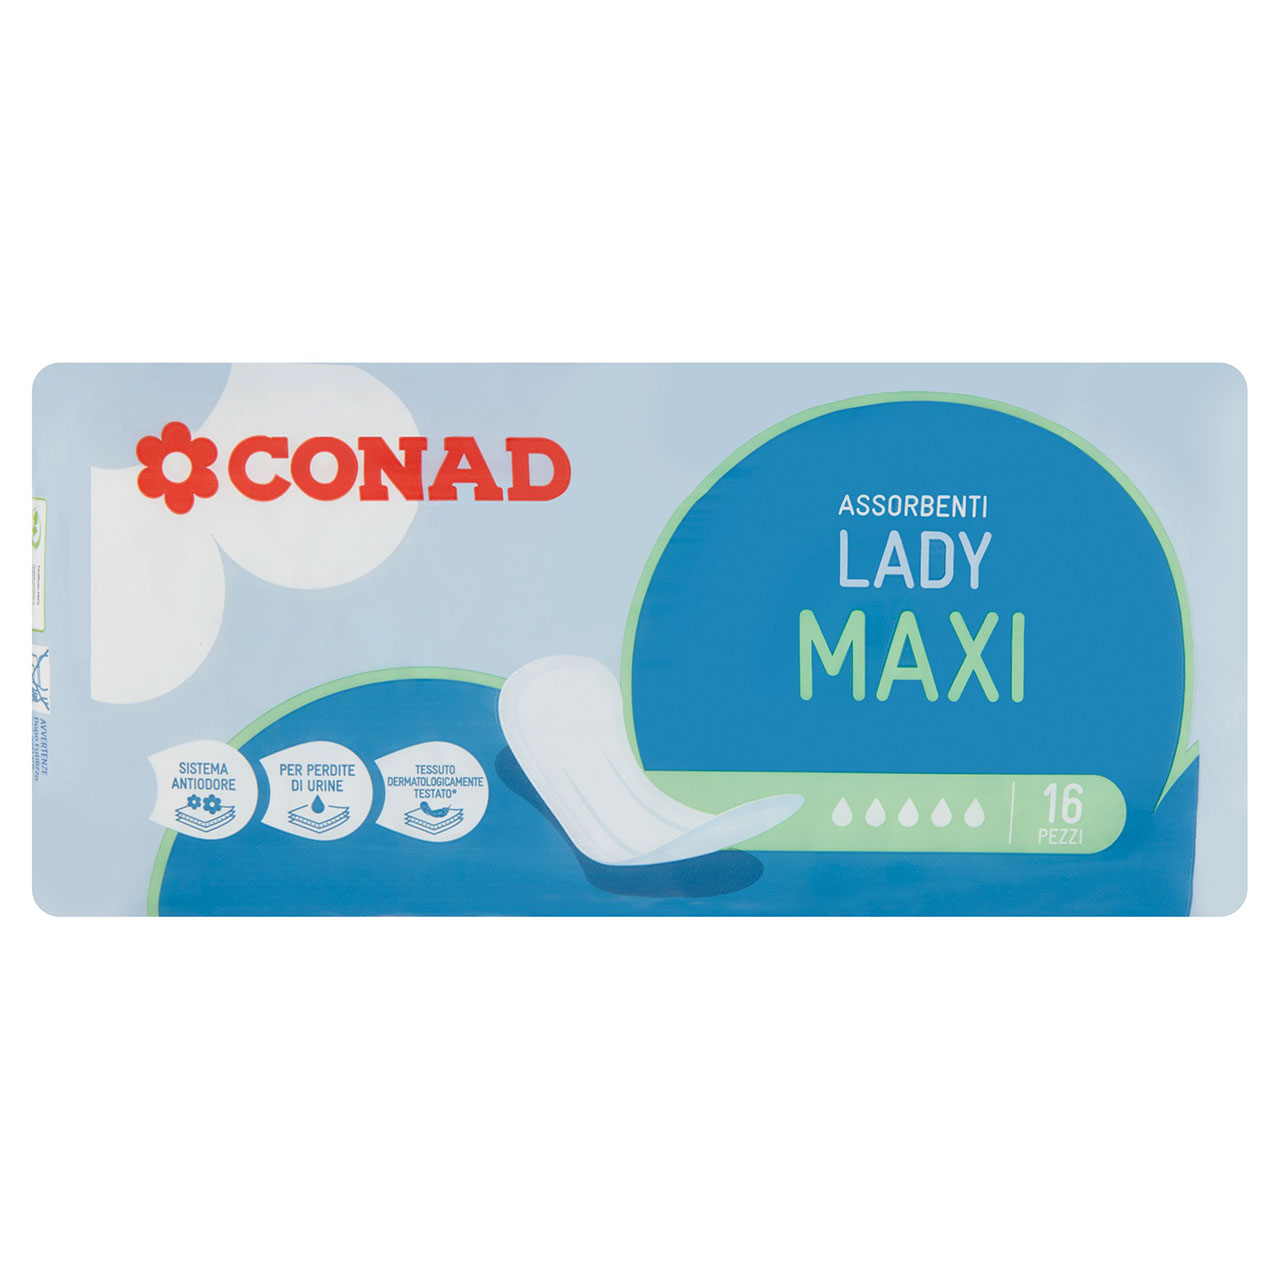 Assorbenti Lady Maxi 16 pz Conad in vendita online